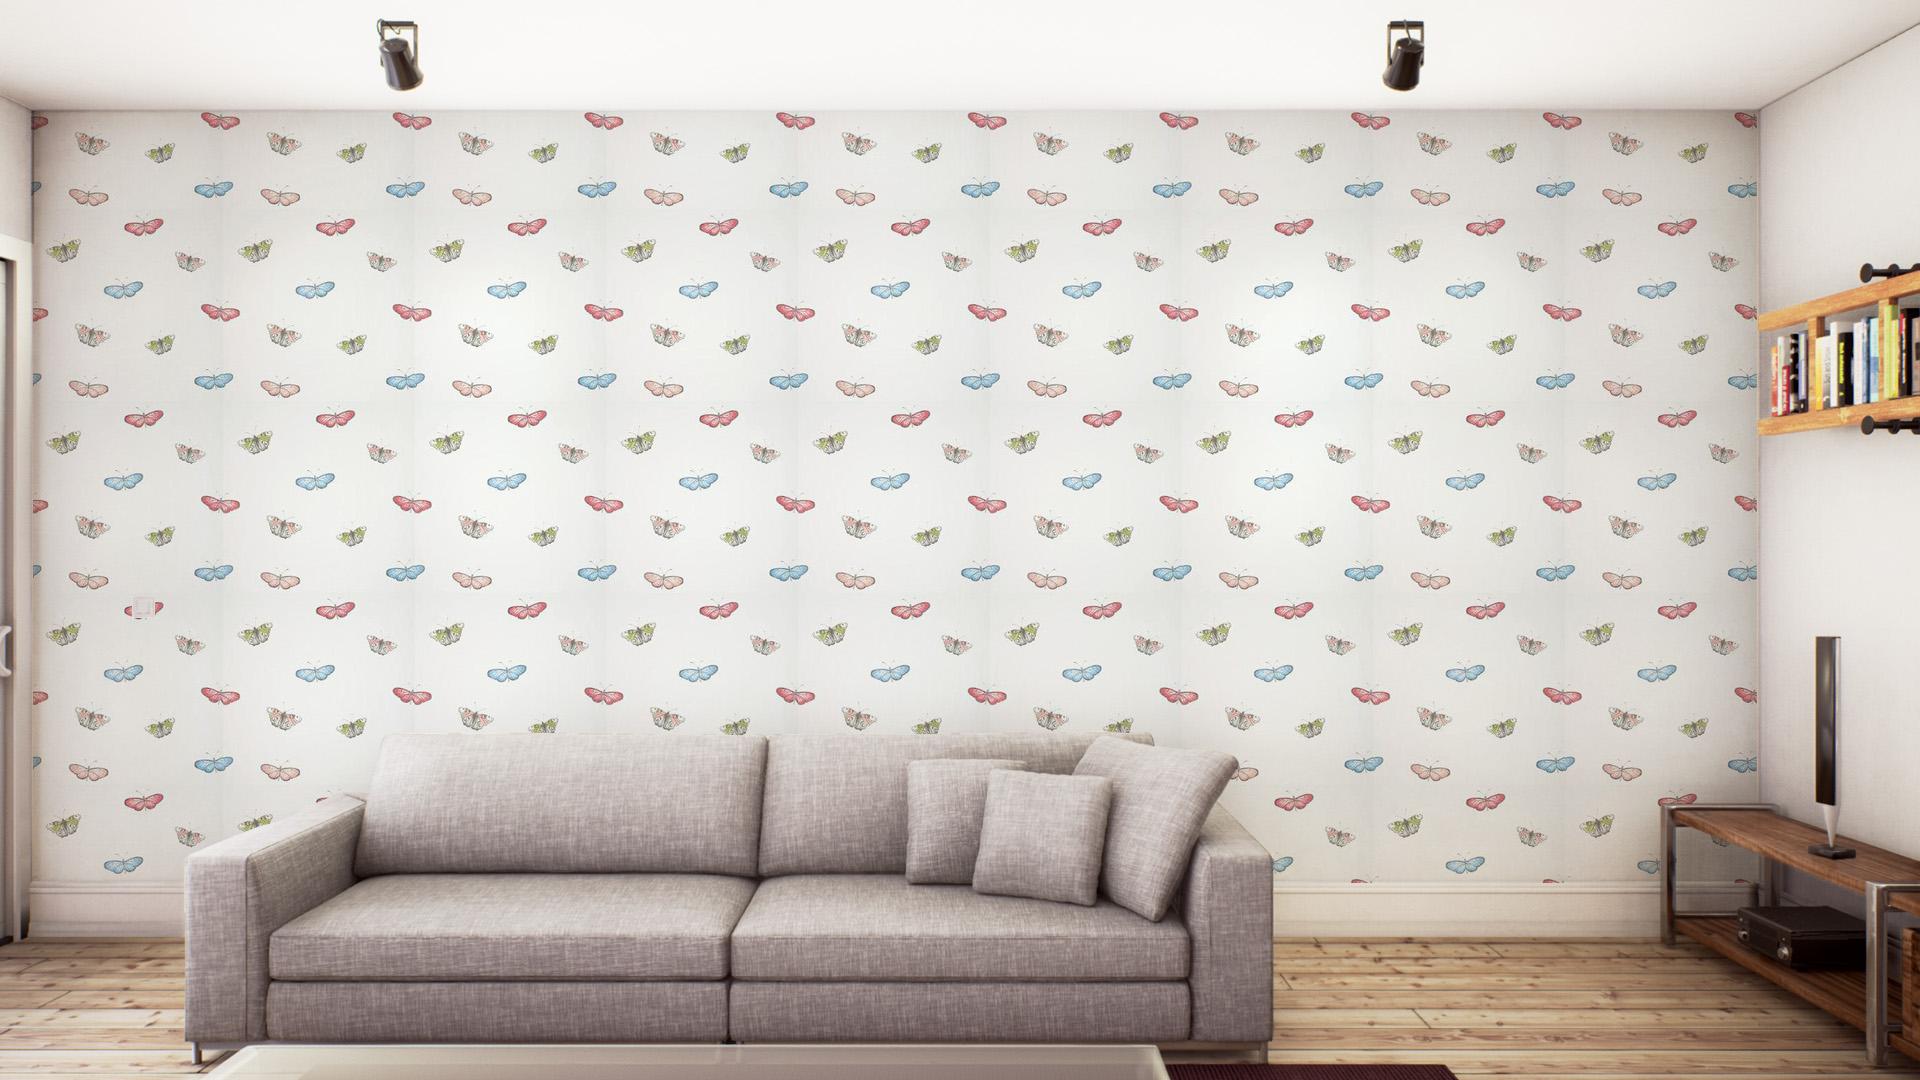 iliv wallpaper,wallpaper,wall,pattern,interior design,couch